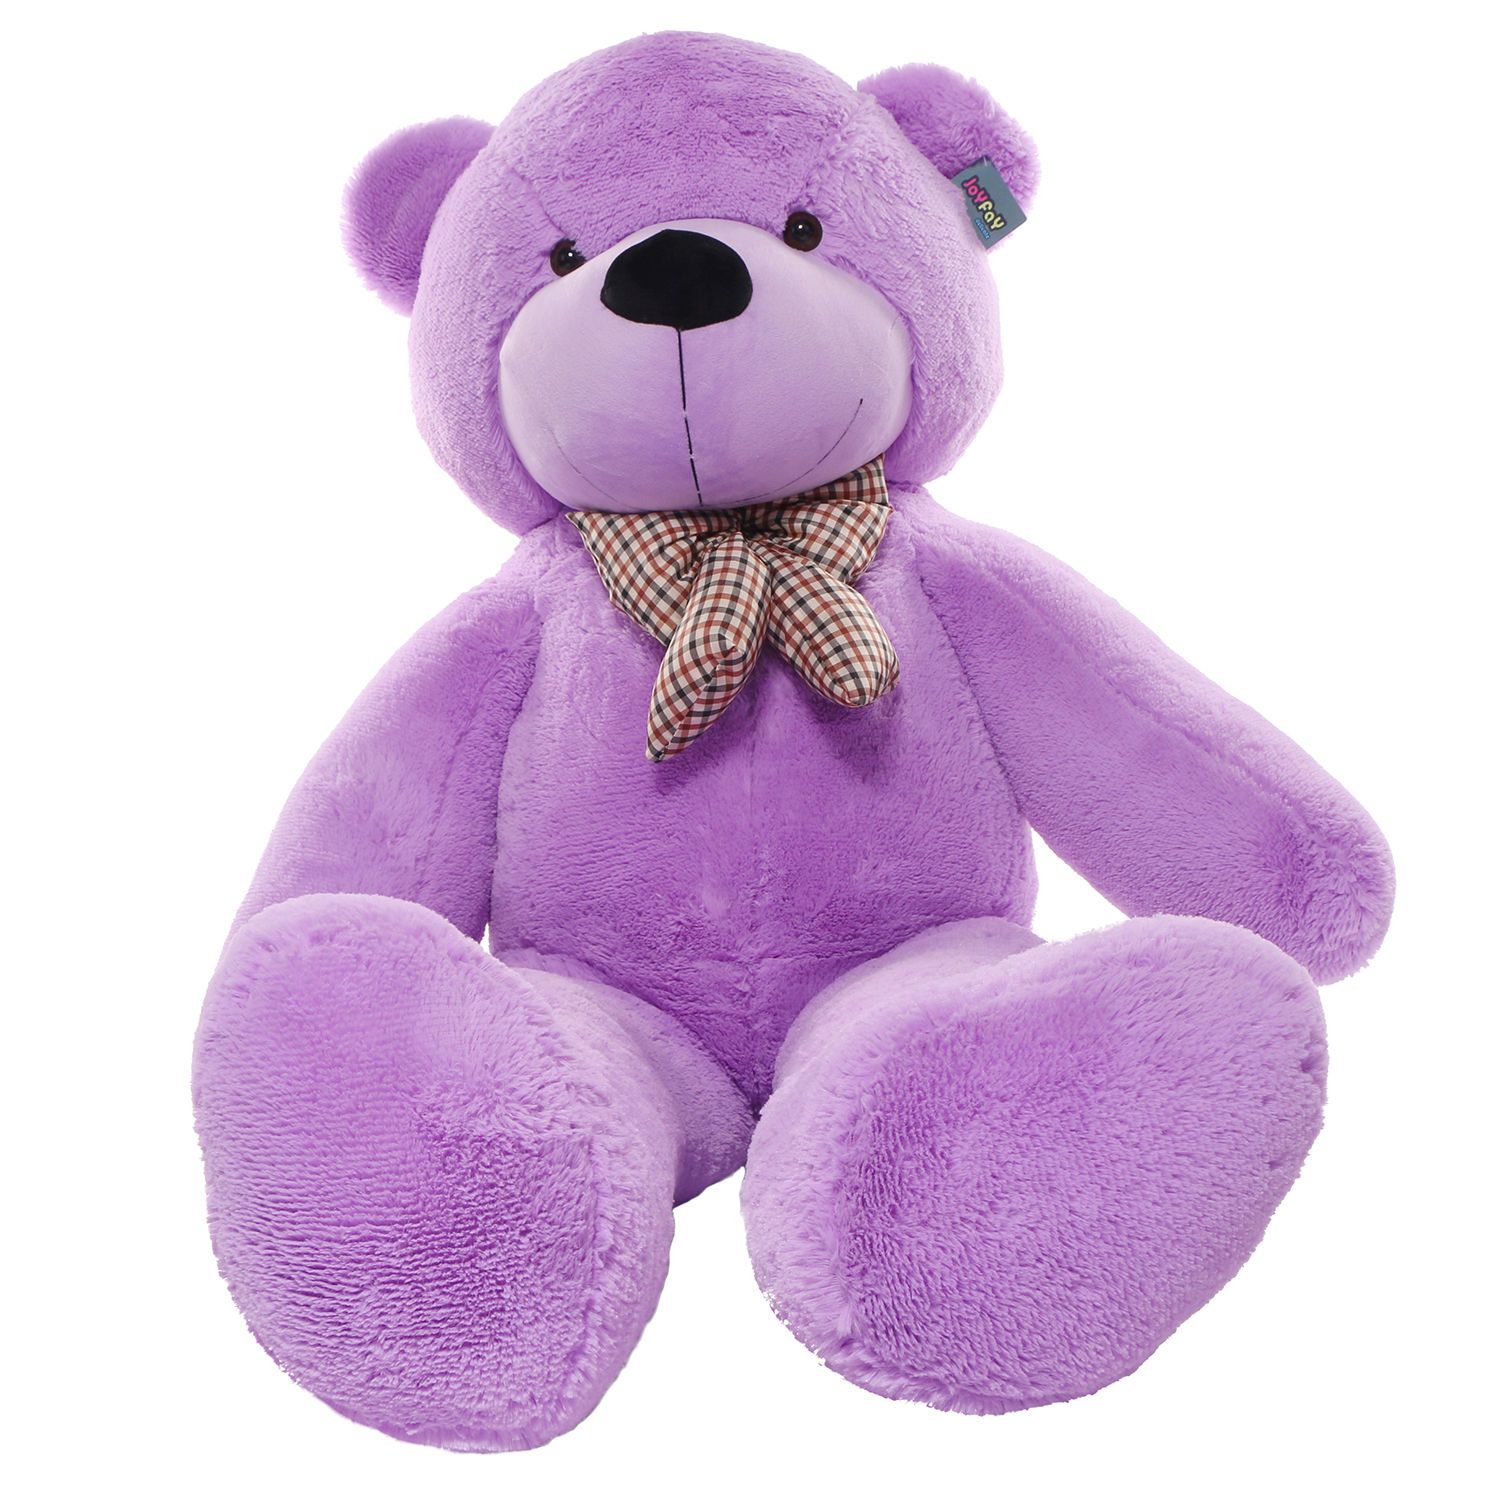 Stuffed Animals Joyfay® Purple Giant Teddy Bear 63